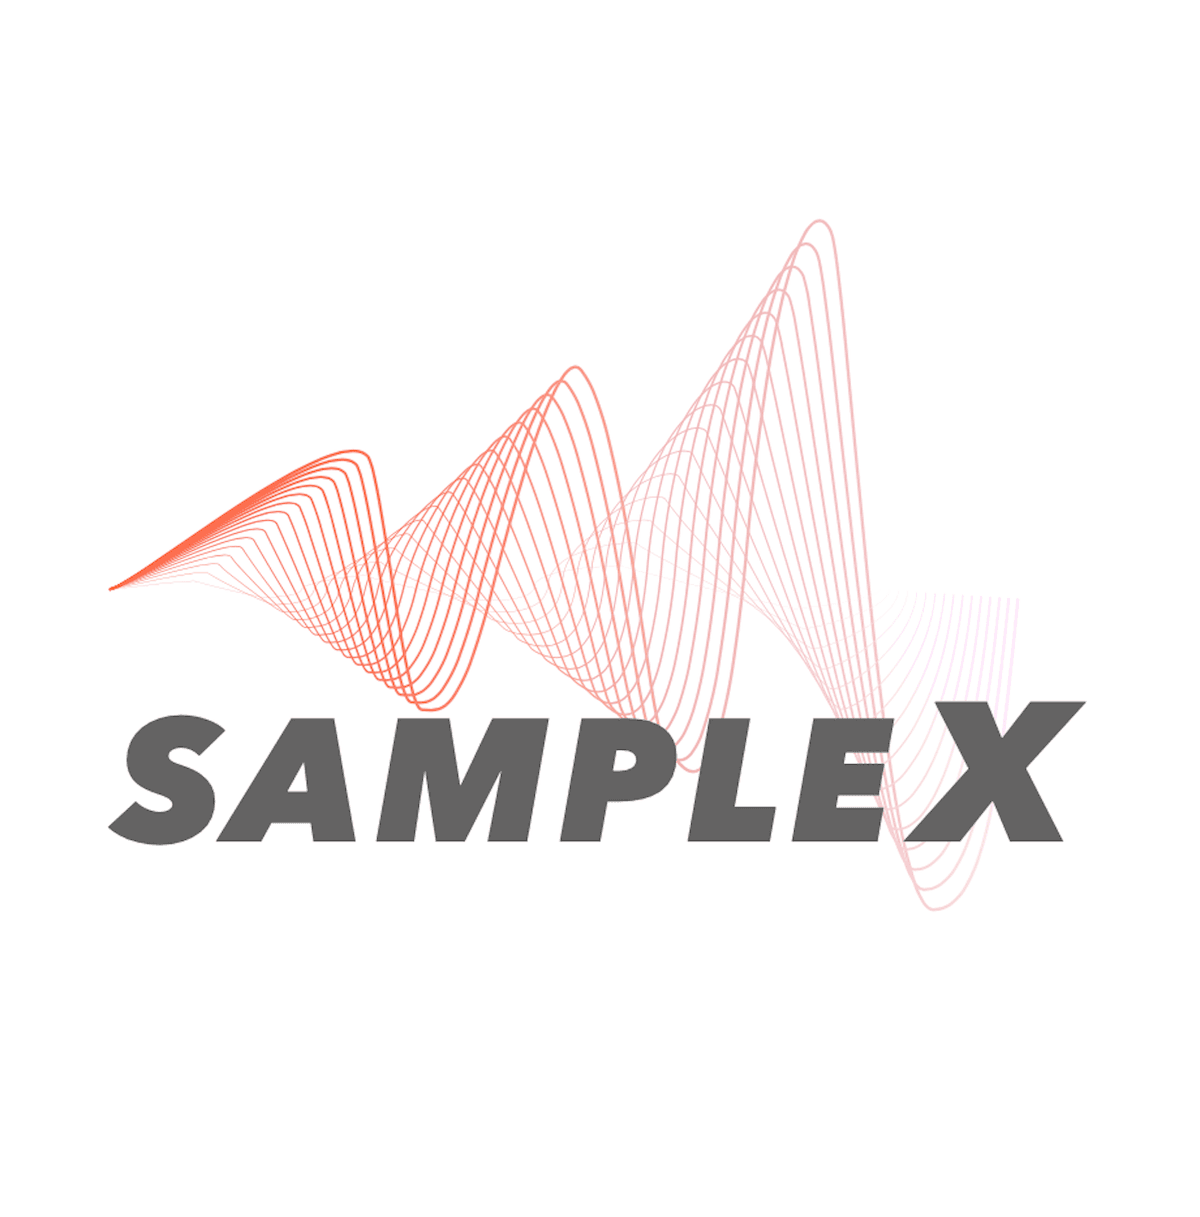 Sample_X banner